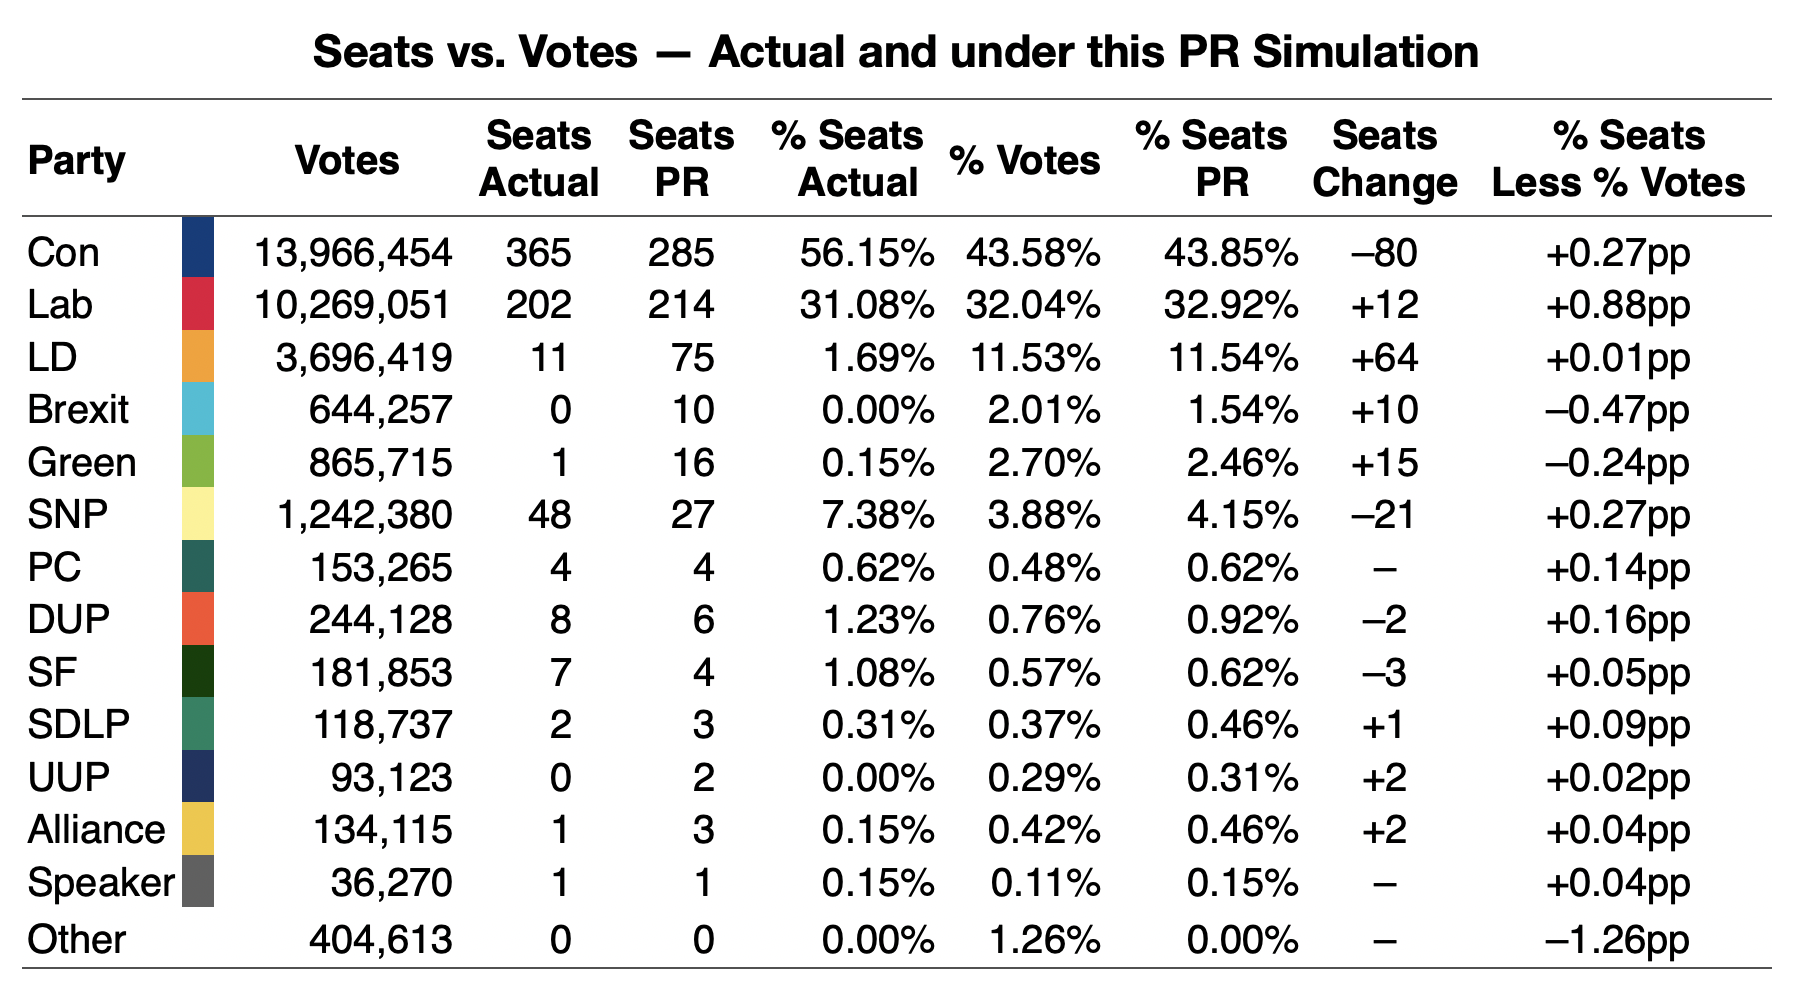 VOTES VS. SEATS: ACTUAL AND UNDER PR SIMULATION